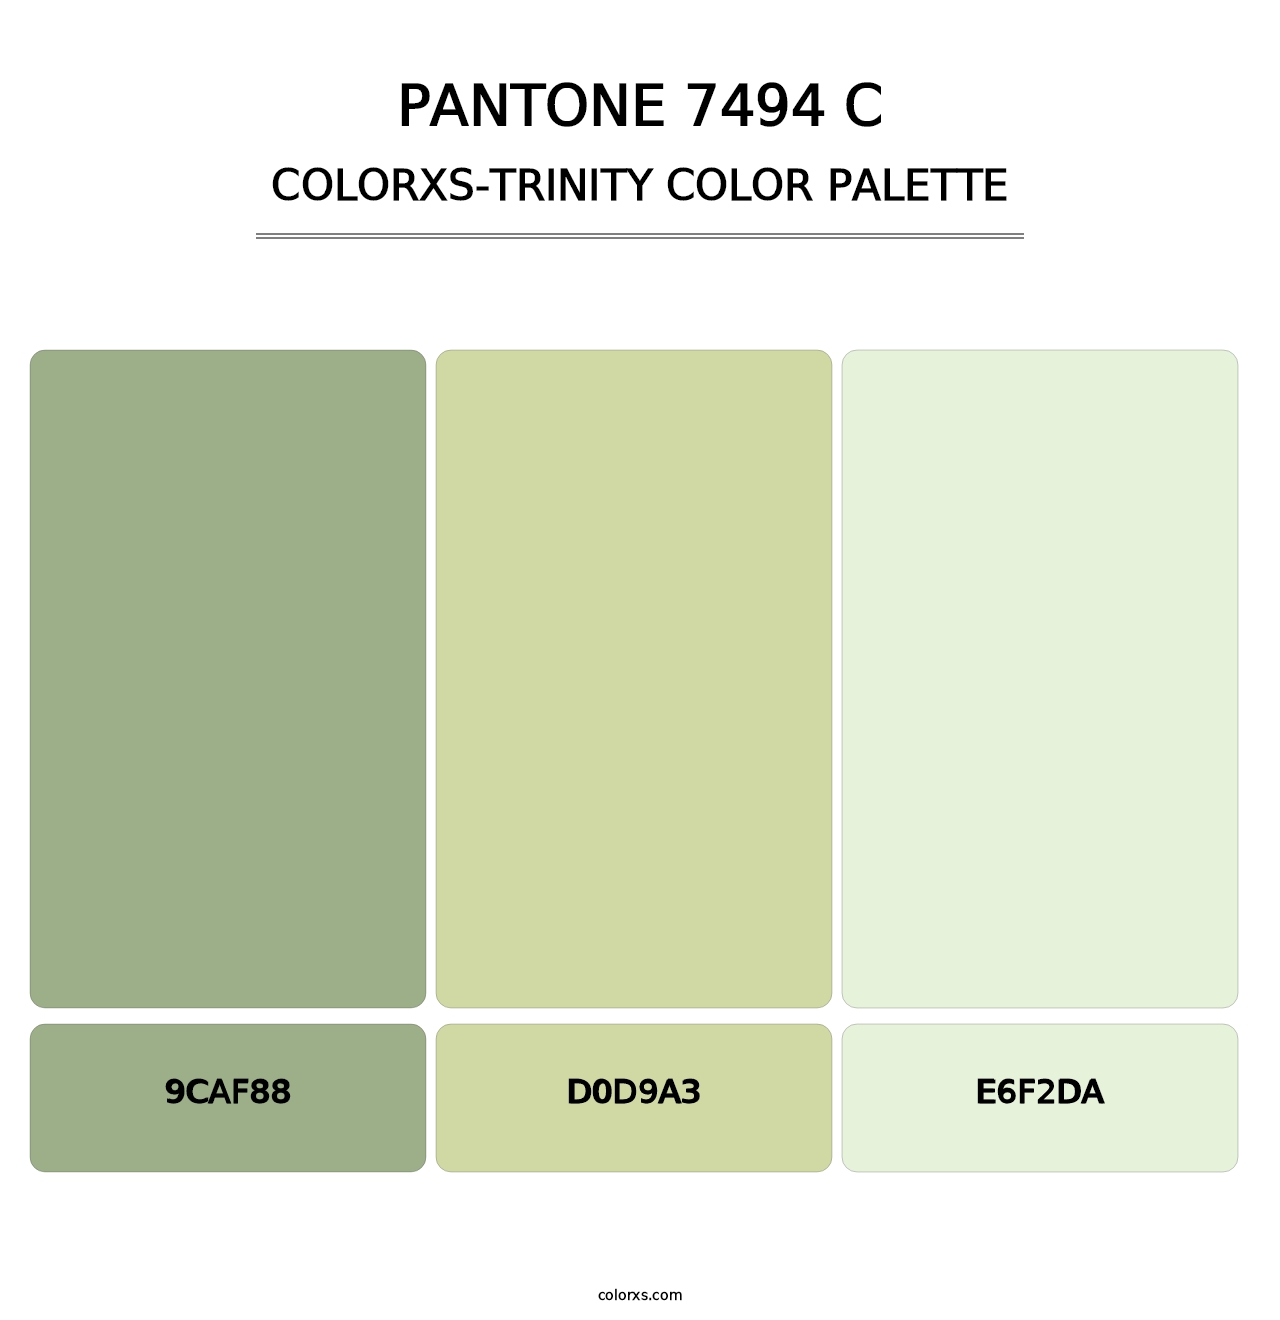 PANTONE 7494 C - Colorxs Trinity Palette